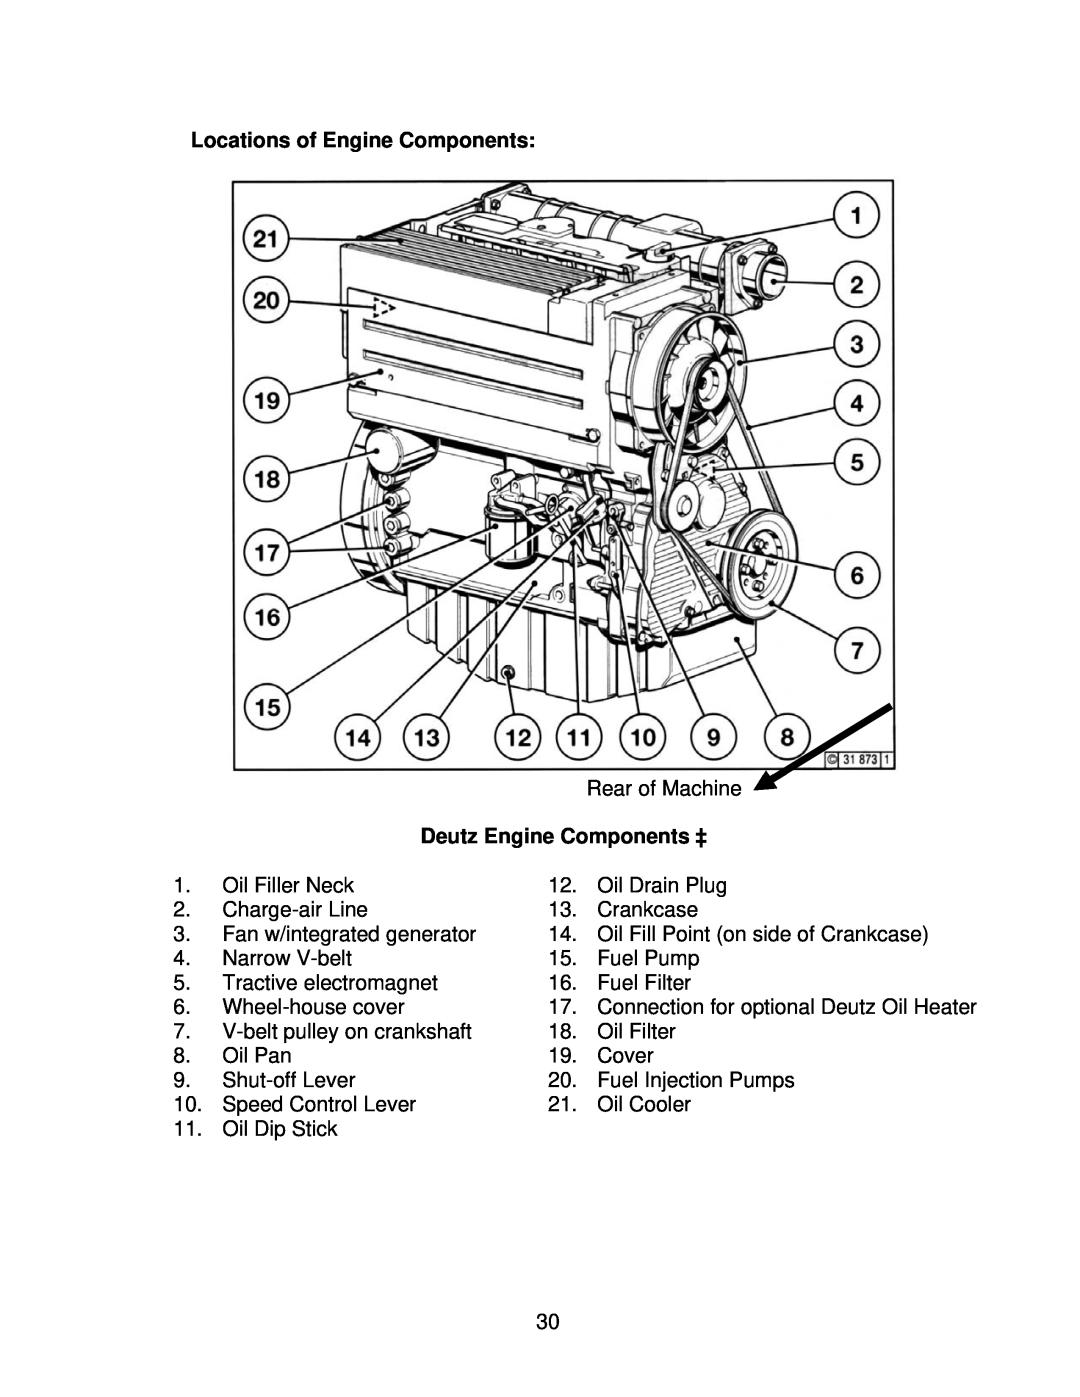 Norton Abrasives C3126, C3120, C6120, C3130, C6136, C6130, C6126 Locations of Engine Components, Deutz Engine Components ‡ 